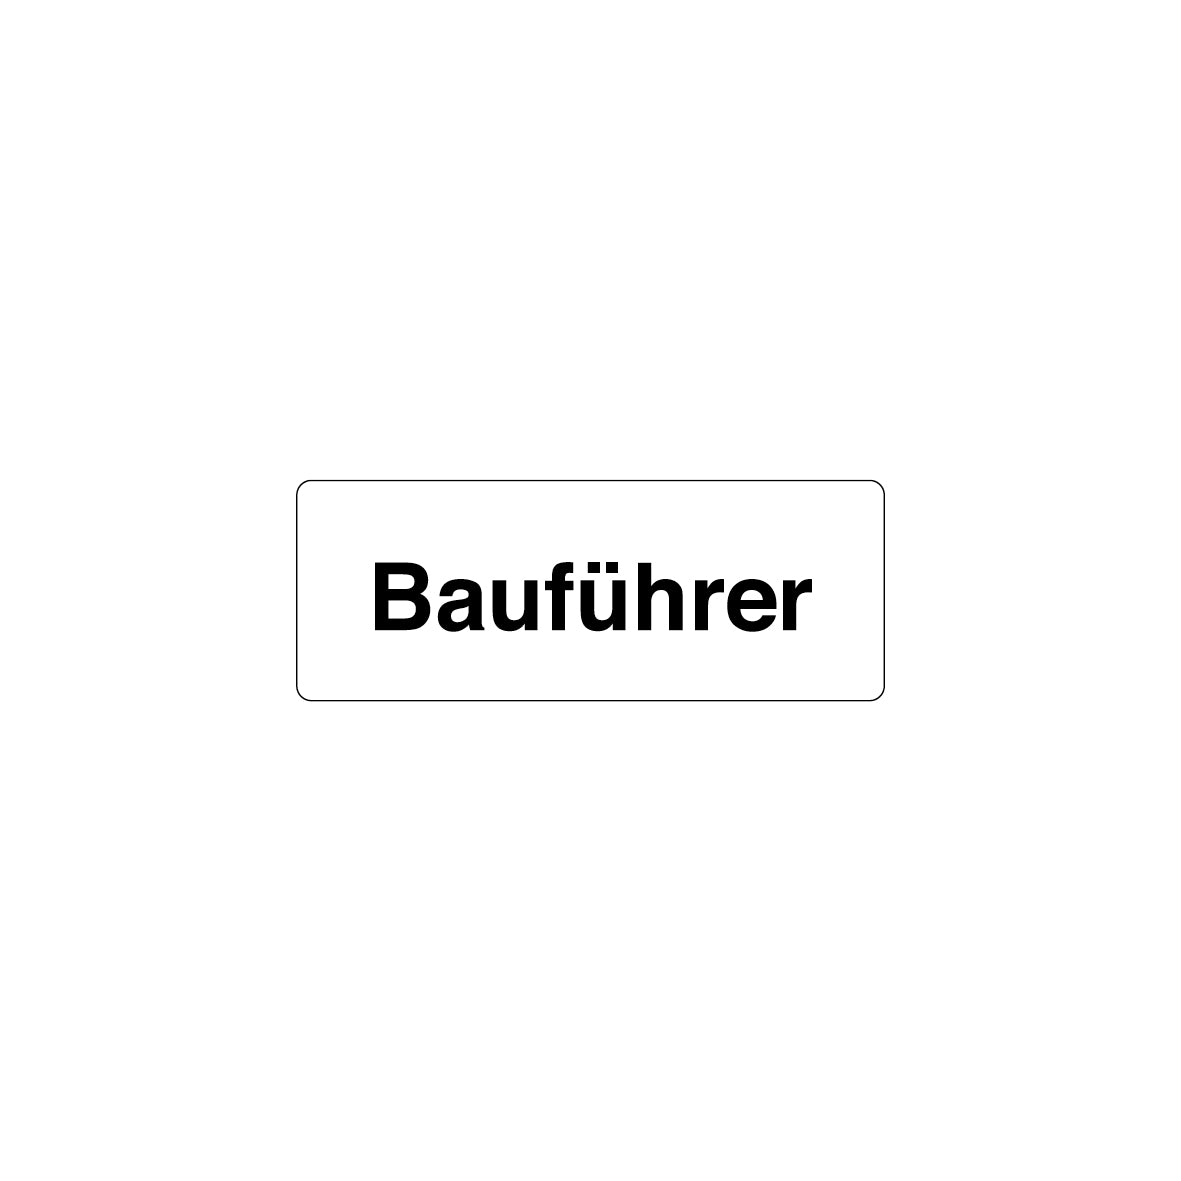 Baustellentafel, Bauführer, 40/15 cm, EG, 7.0168